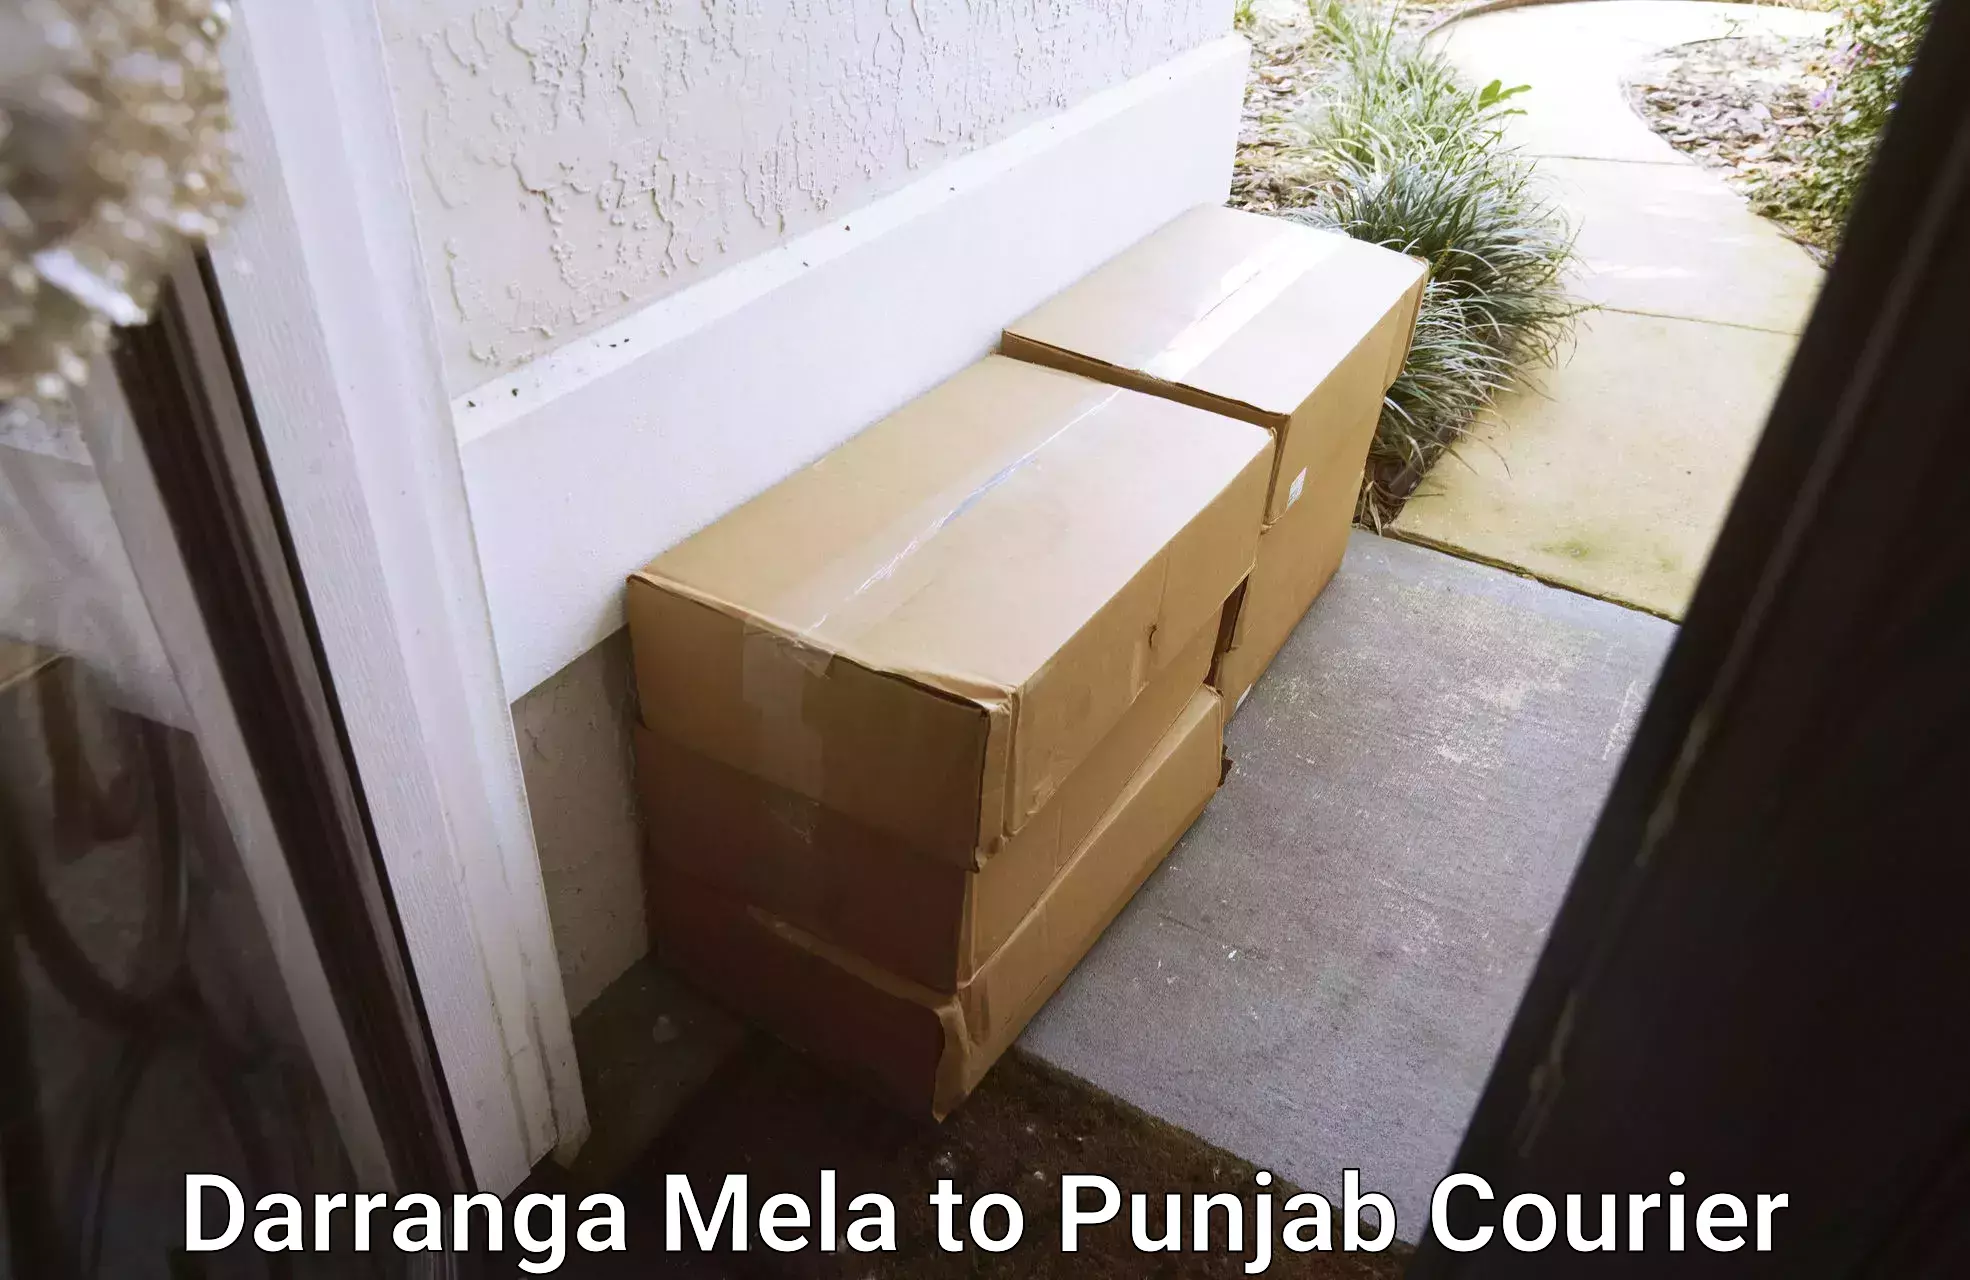 Digital courier platforms Darranga Mela to Mandi Gobindgarh